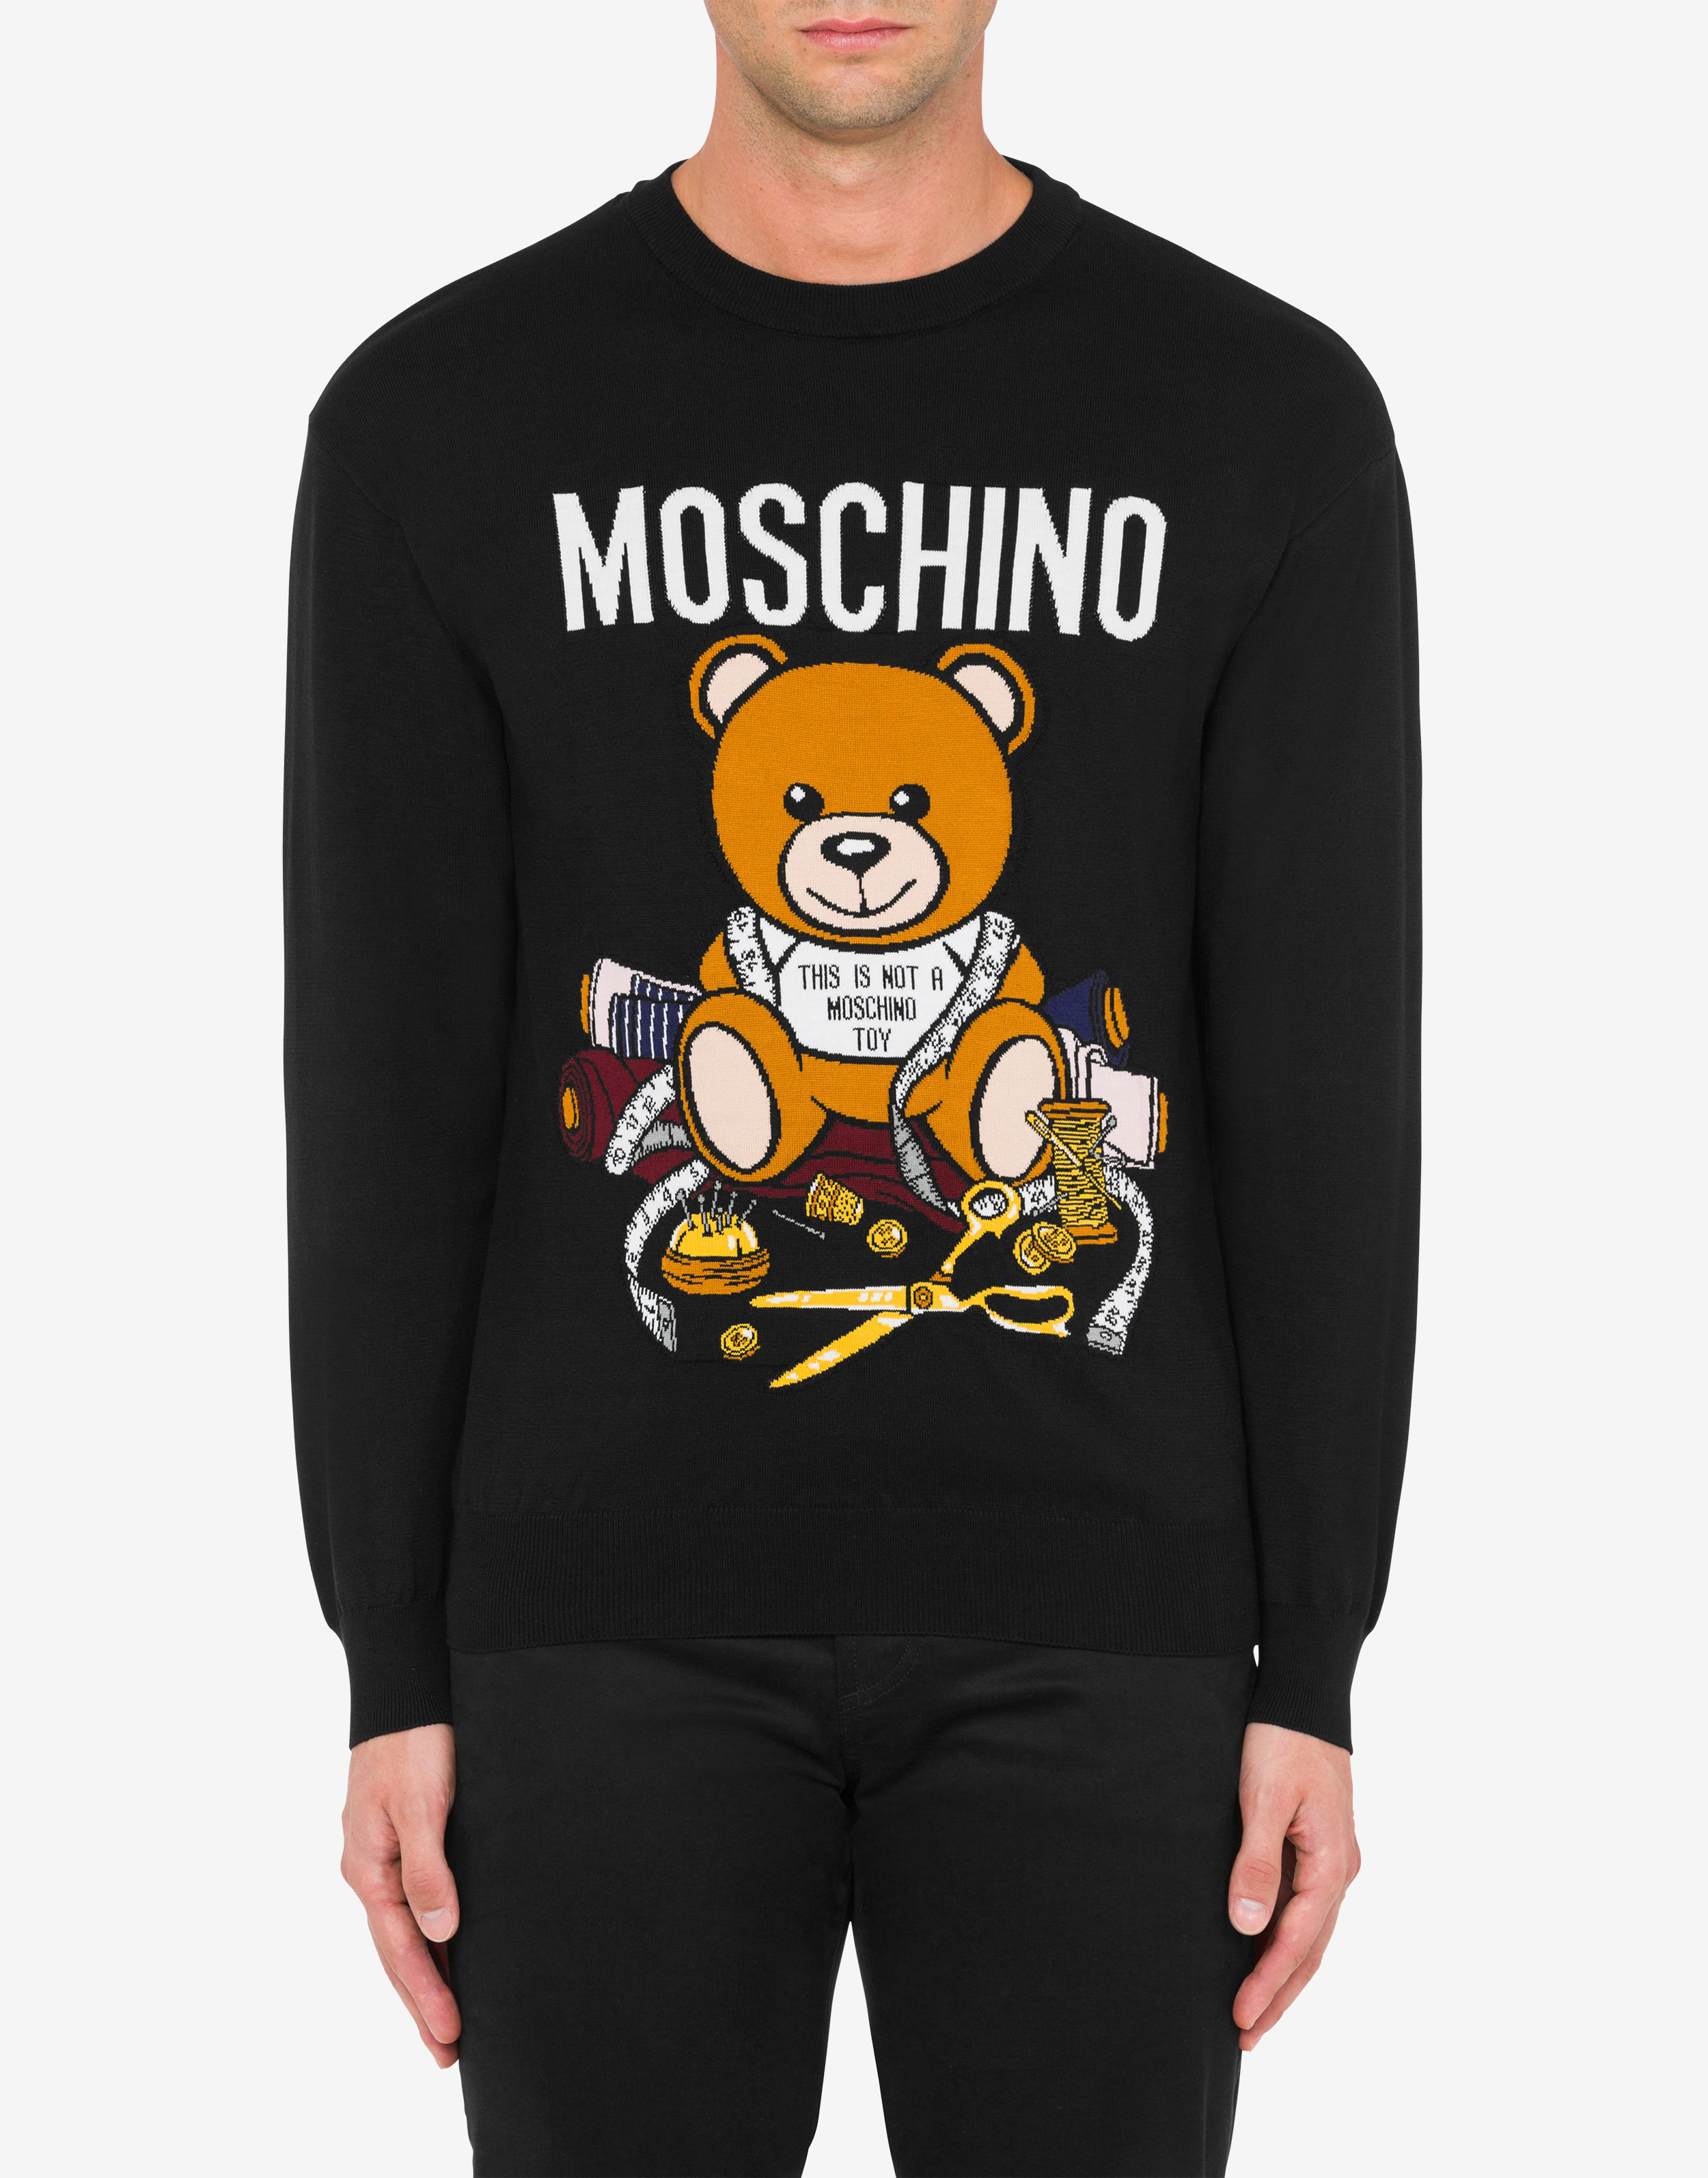 TE_55623_A Teddy bear in sweater with Fabric